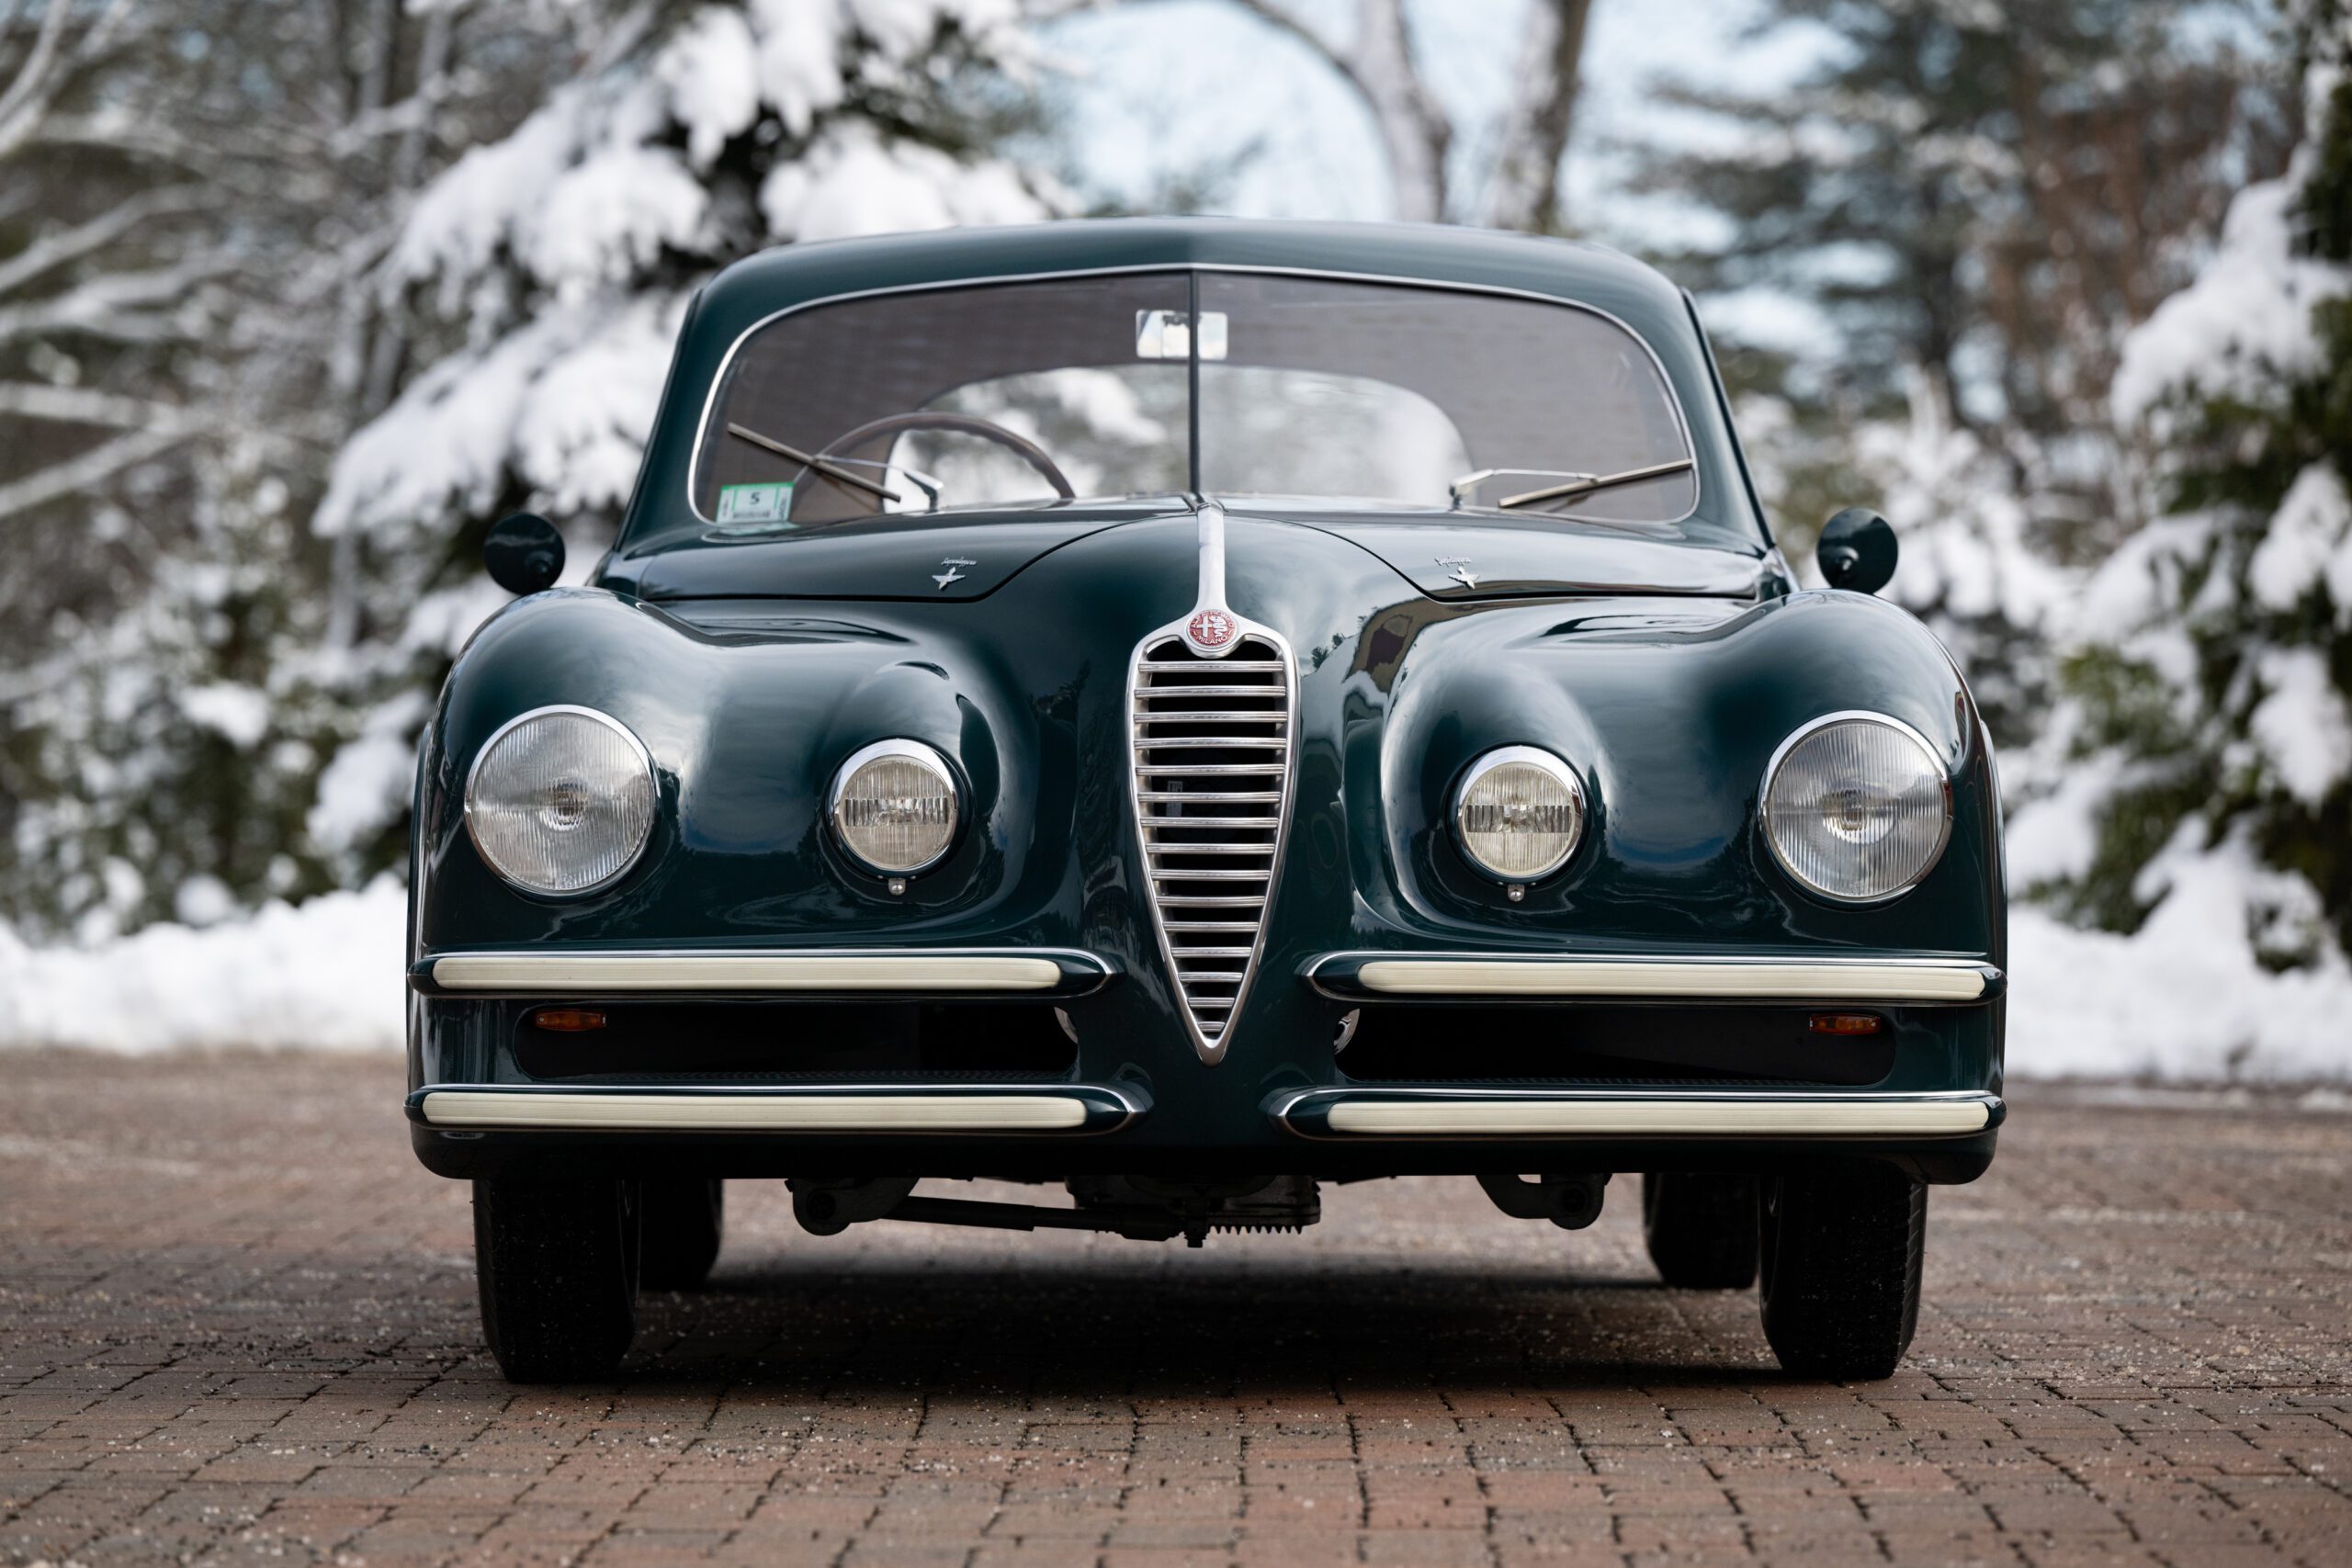 1950 Alfa Romeo 6C 2500 Super Sport Coupe by Touring, 1950 Alfa Romeo 6C 2500, Alfa Romeo, Alfa Romeo 6C 2500